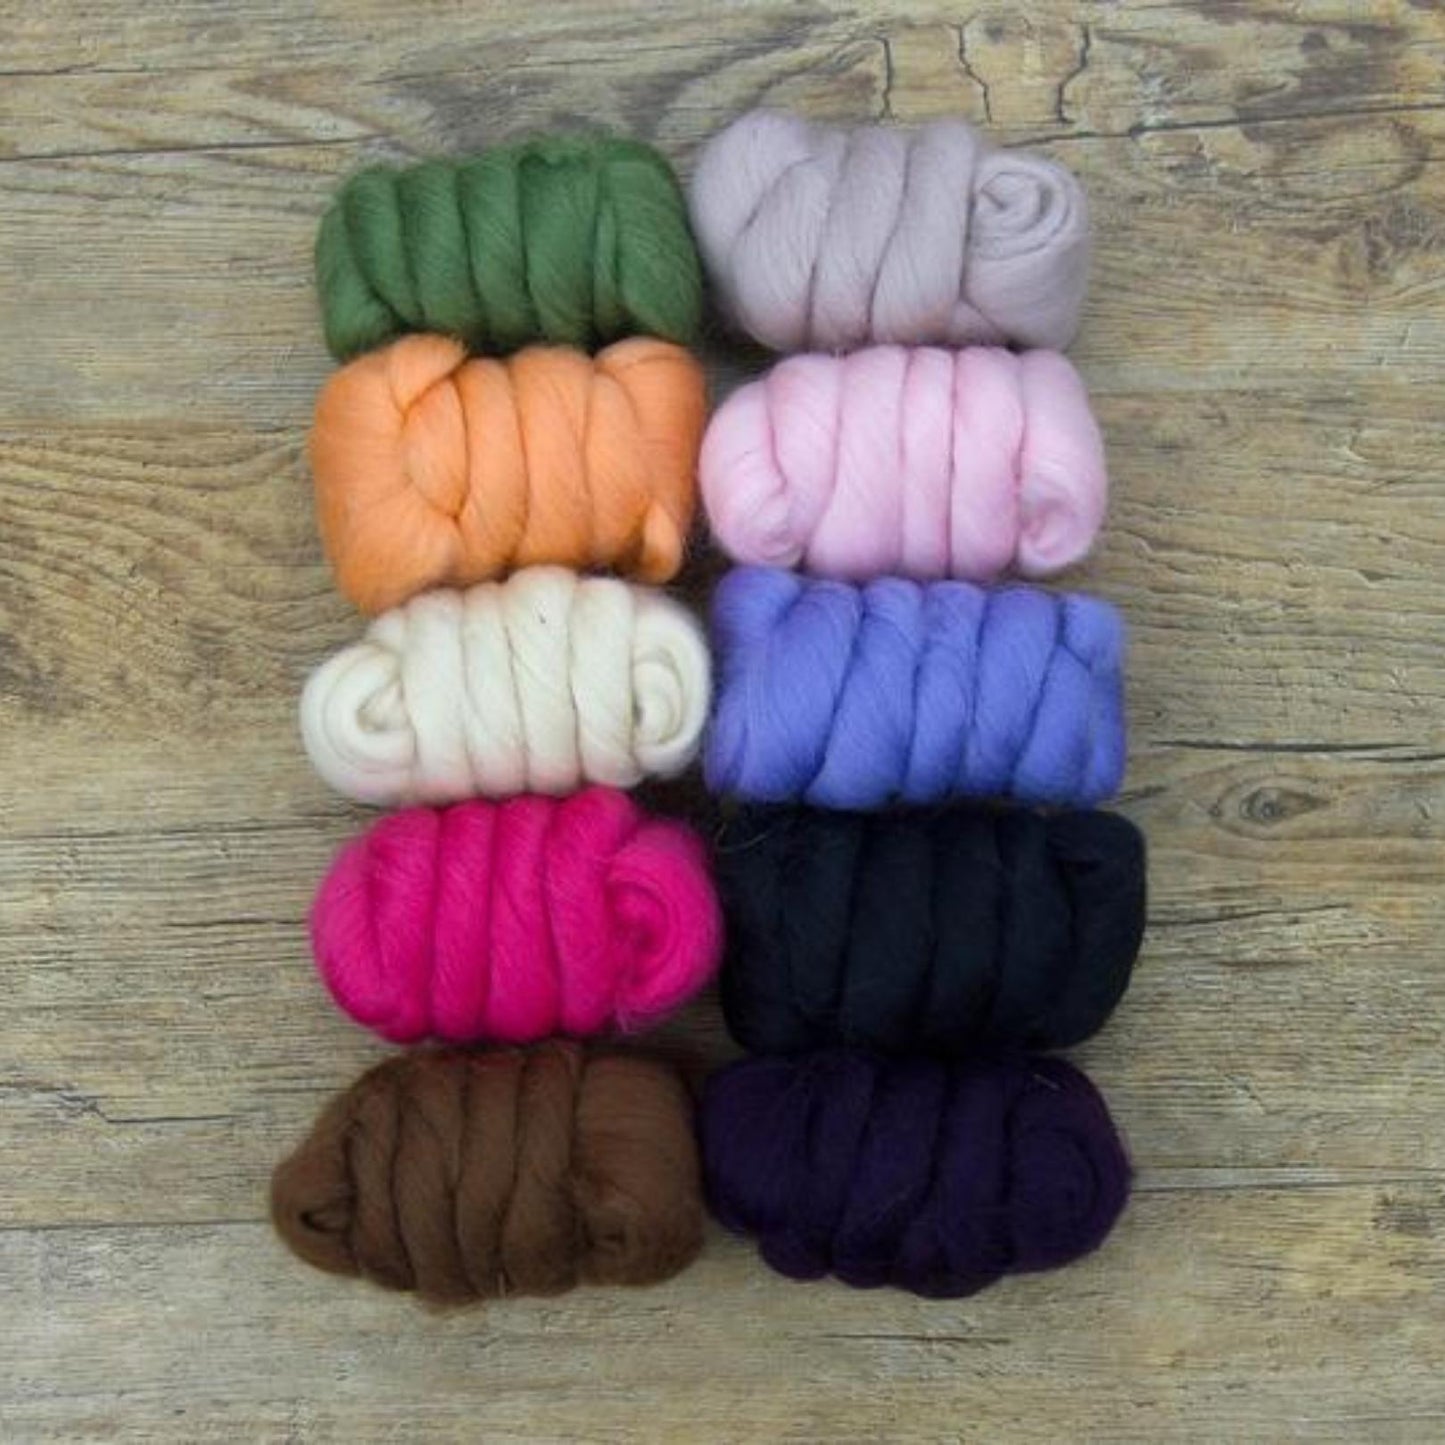 Mixed Merino Wool Variety Pack | Mystery Merino (Multicolored Surprise) 250 Grams, 23 Micron